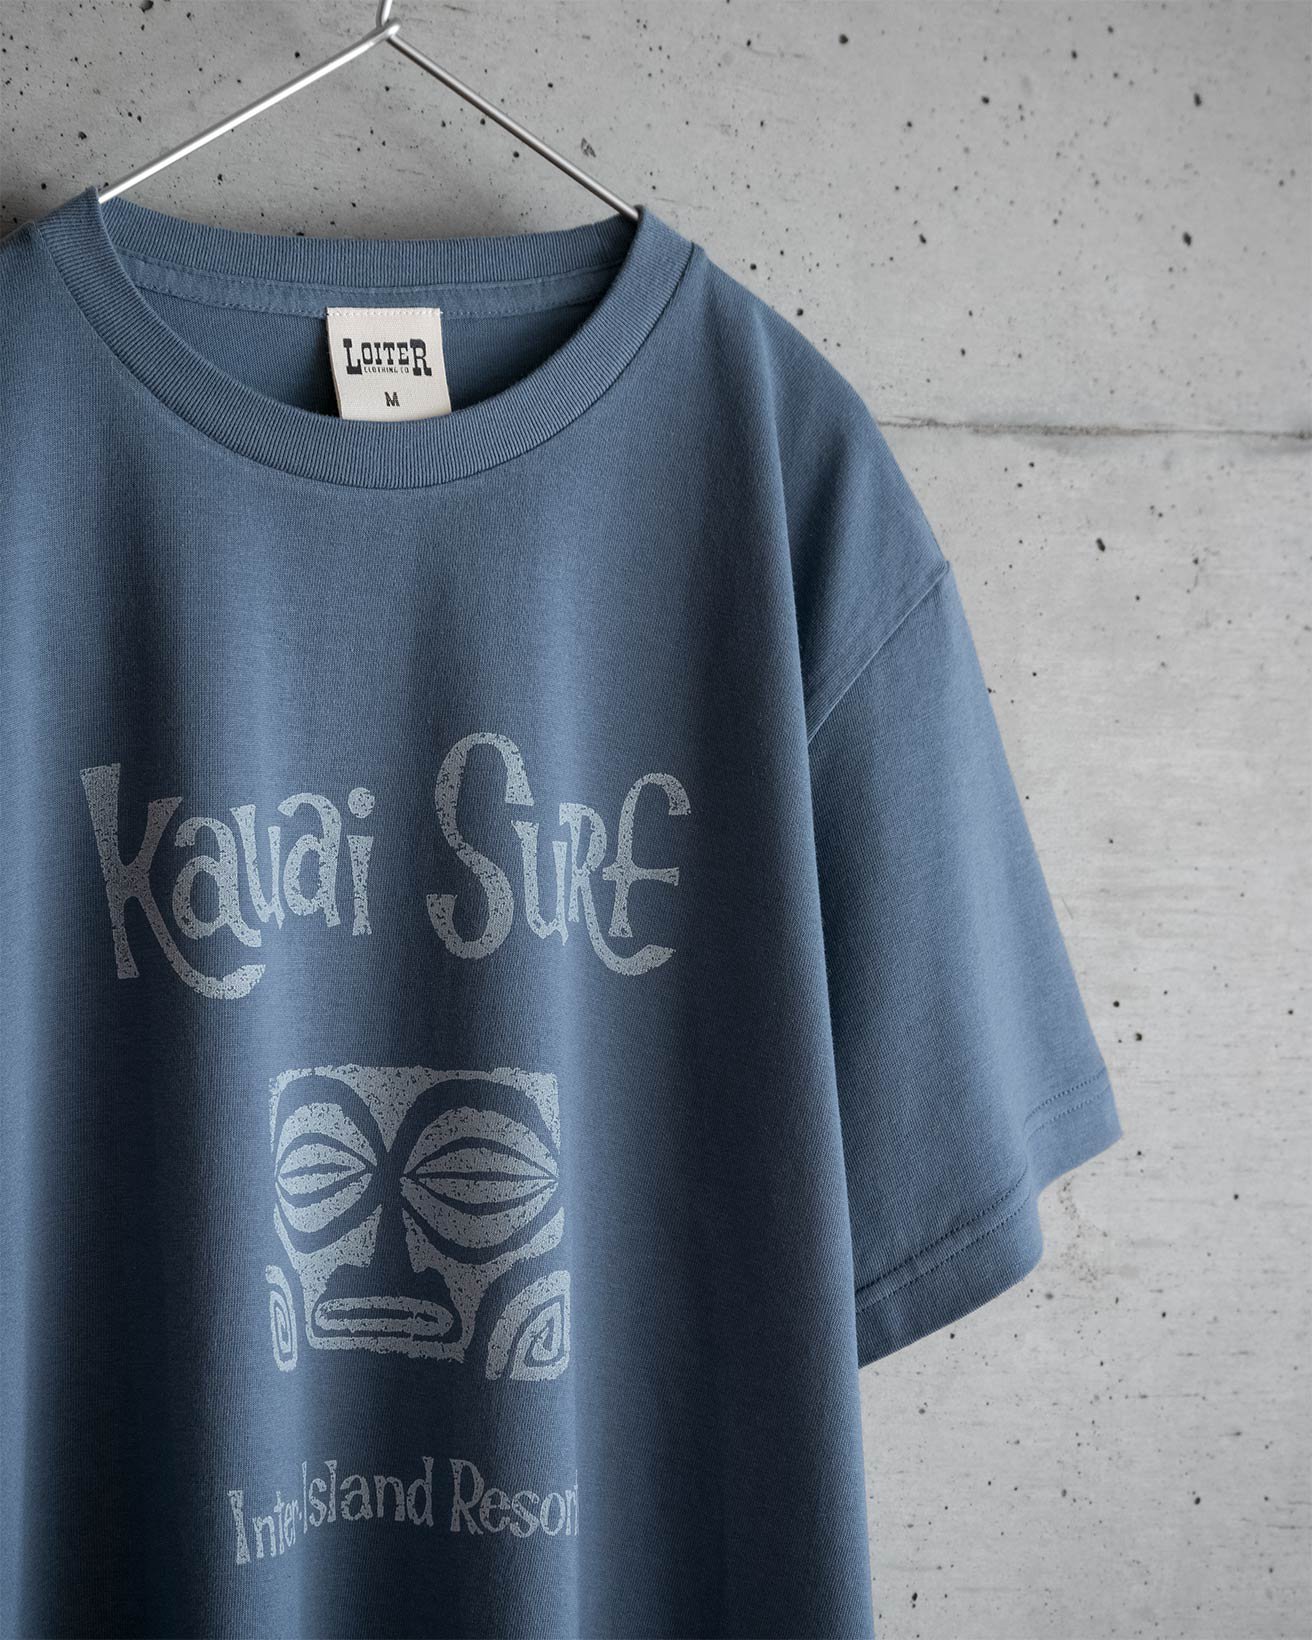 KAUAI SURF Tシャツ